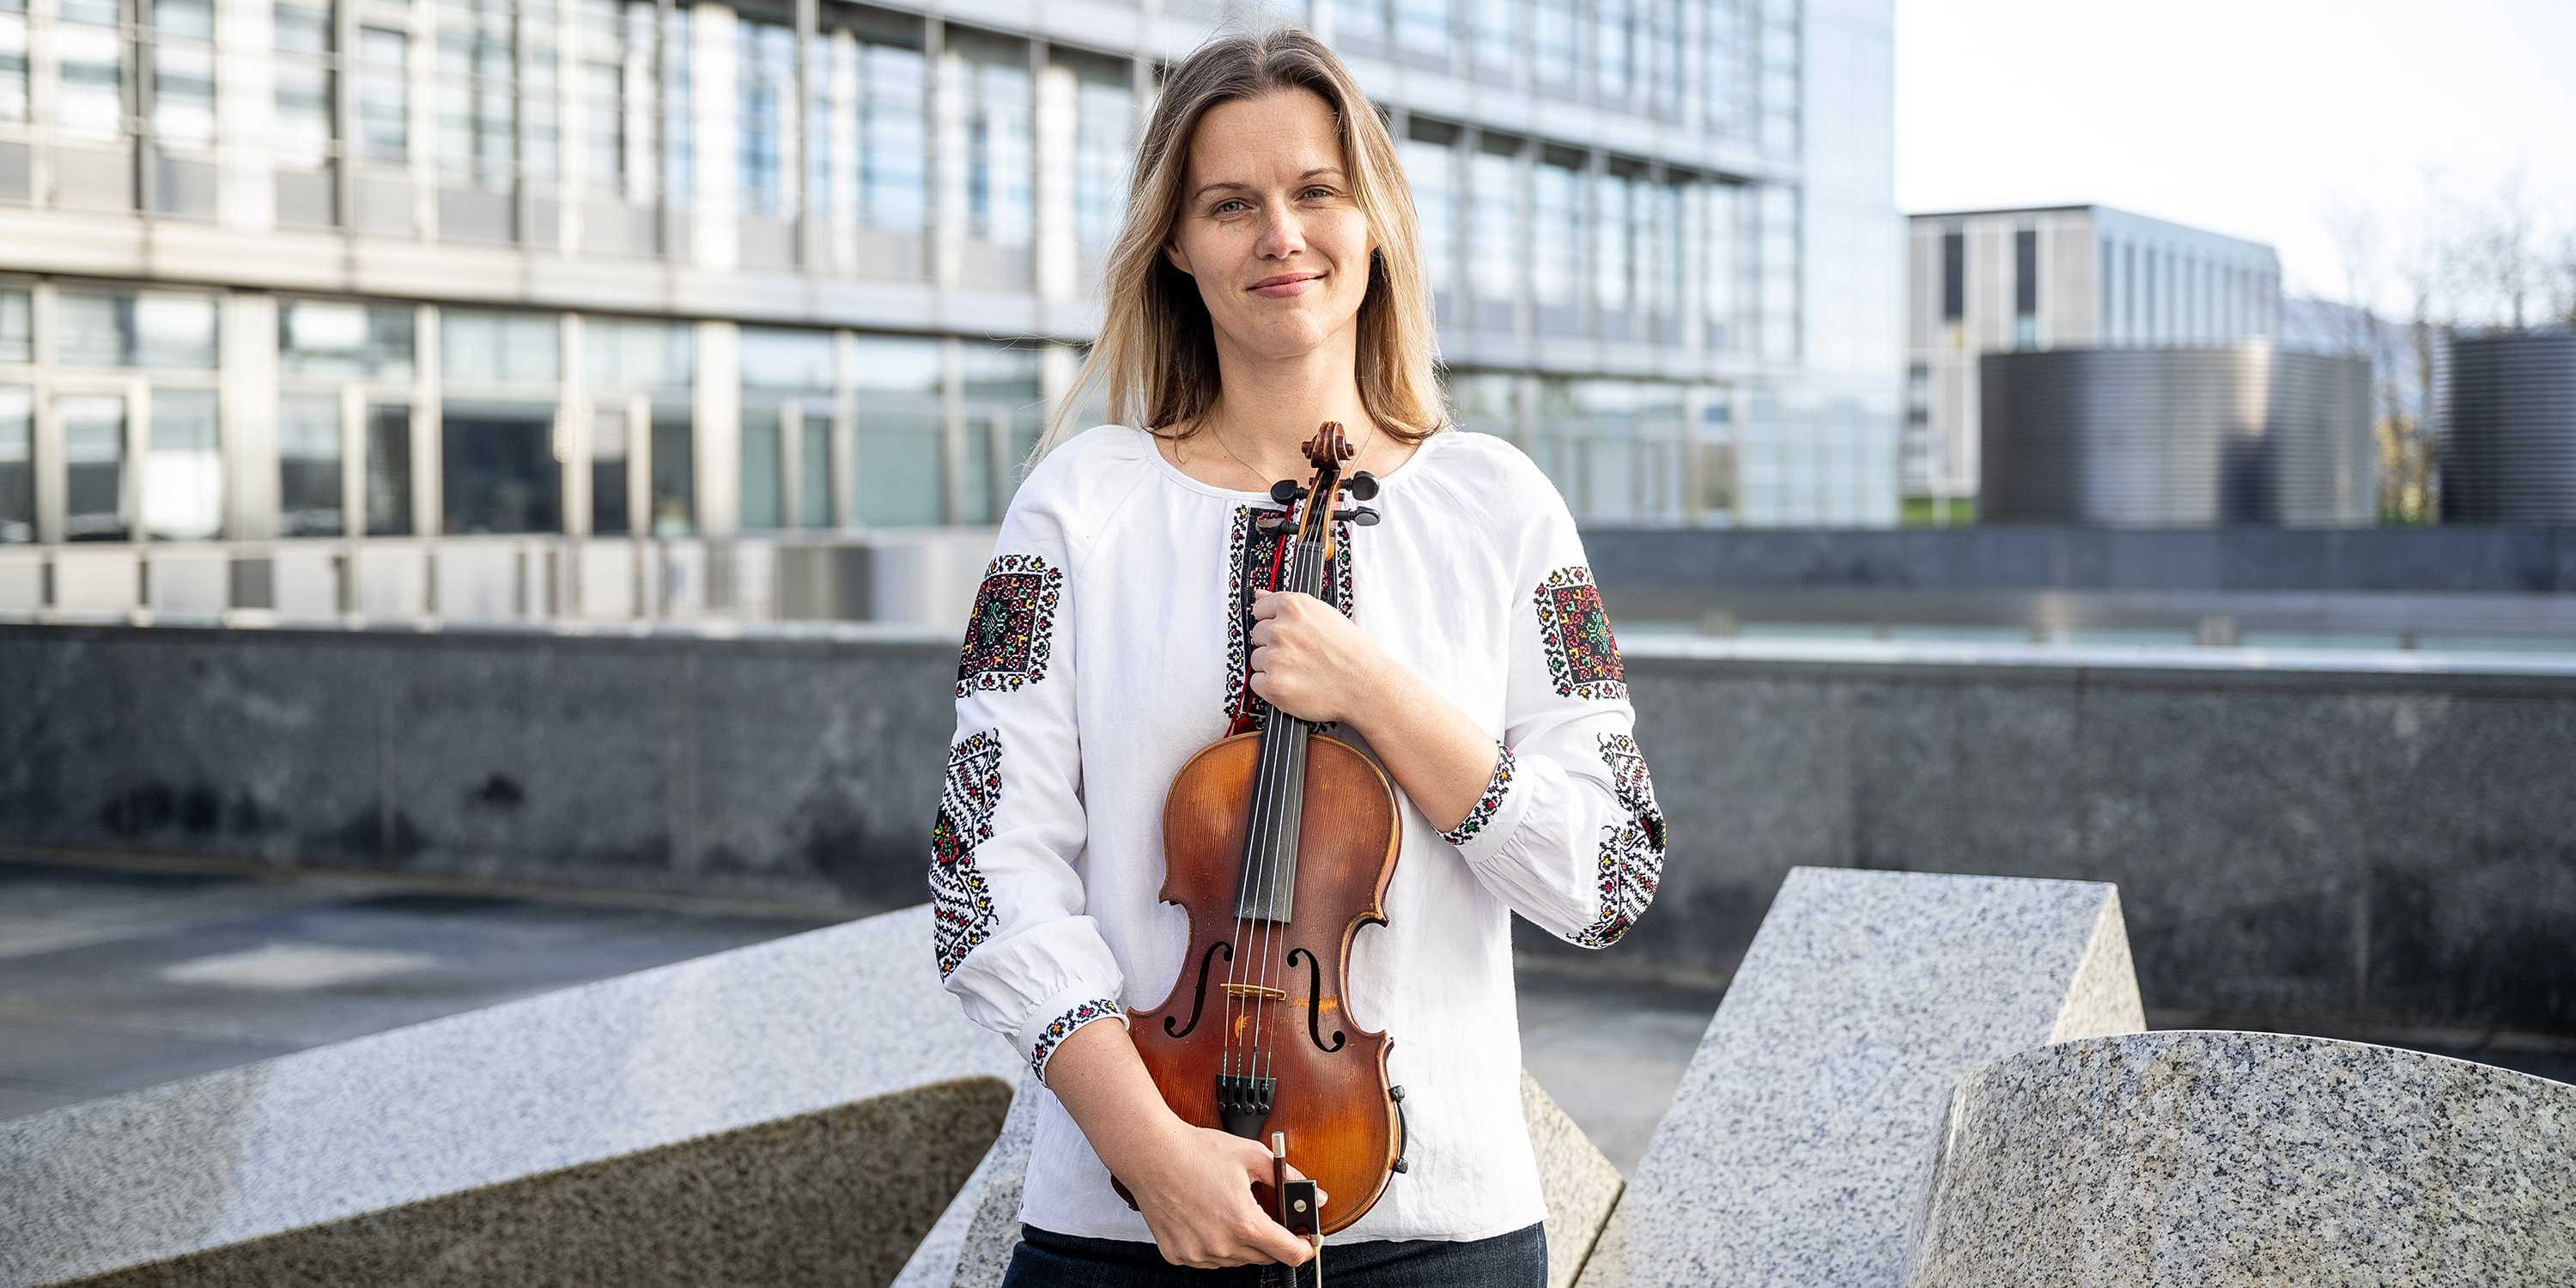 Vira Bonder with her violin in hand